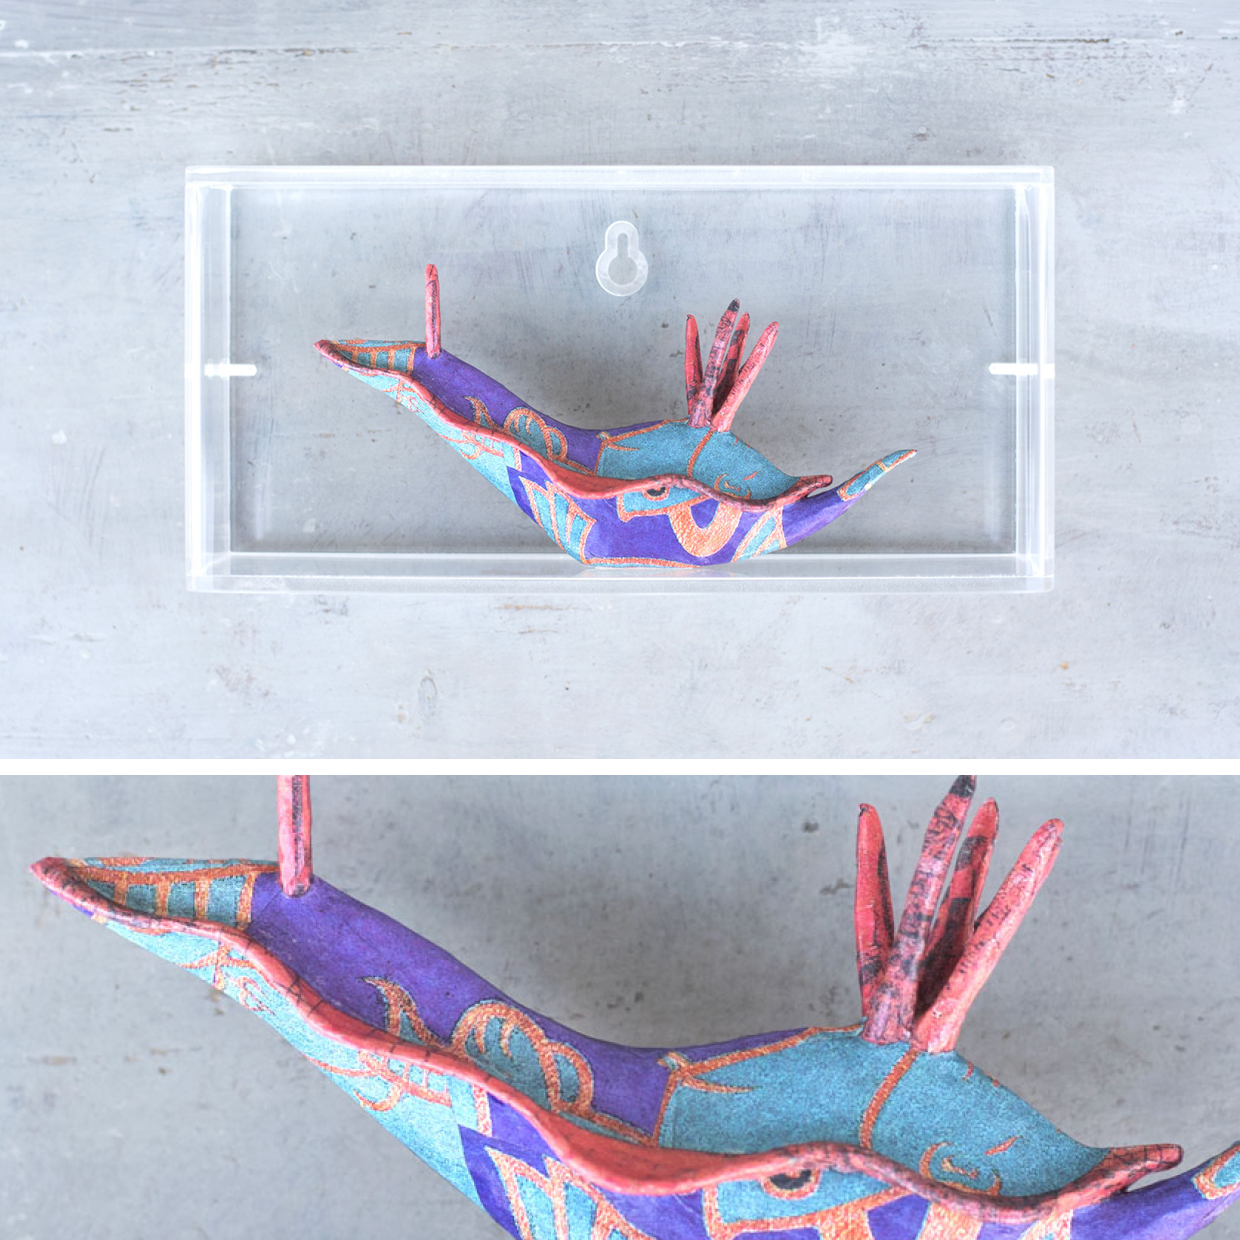 Zanin Alice, Chromodoridoidea #1, cartapesta, resina, plexiglass, 10x20,7x5,6 cm